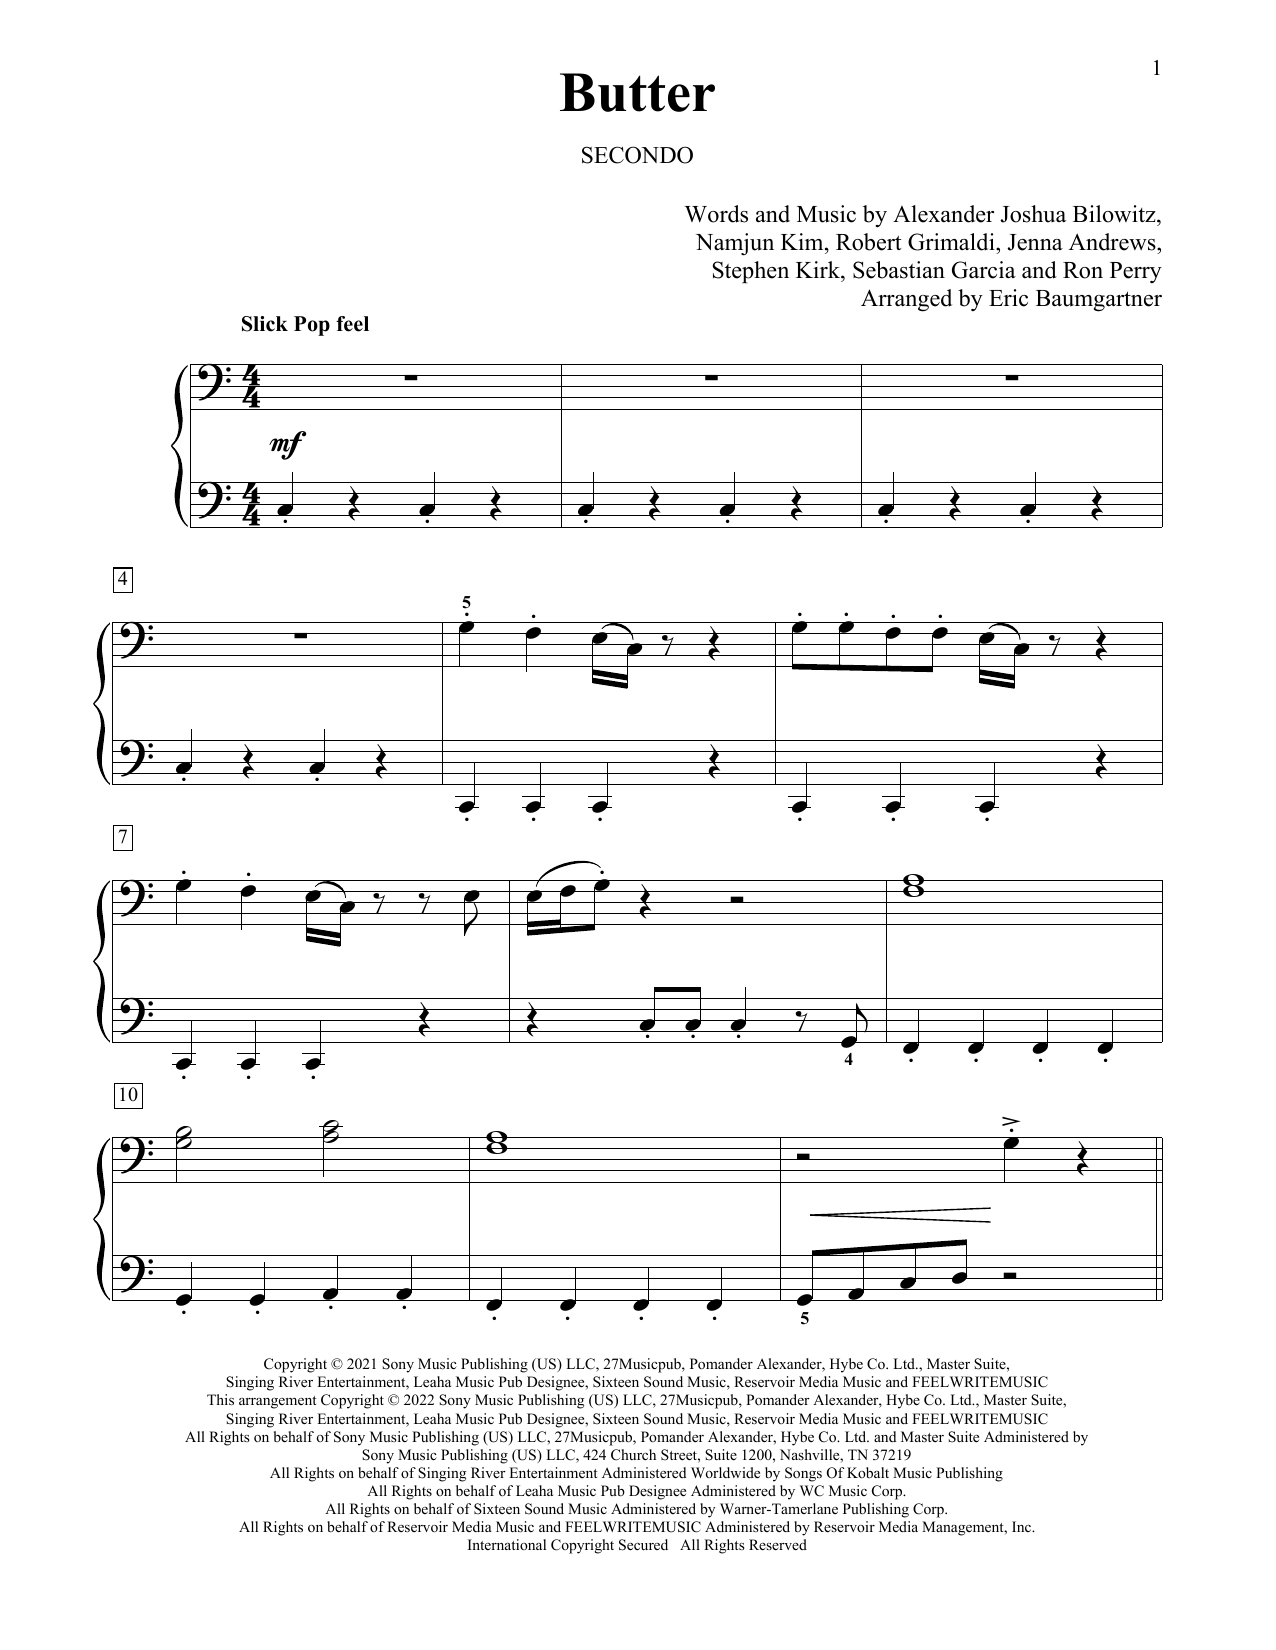 BTS Butter (arr. Eric Baumgartner) Sheet Music Notes & Chords for Piano Duet - Download or Print PDF